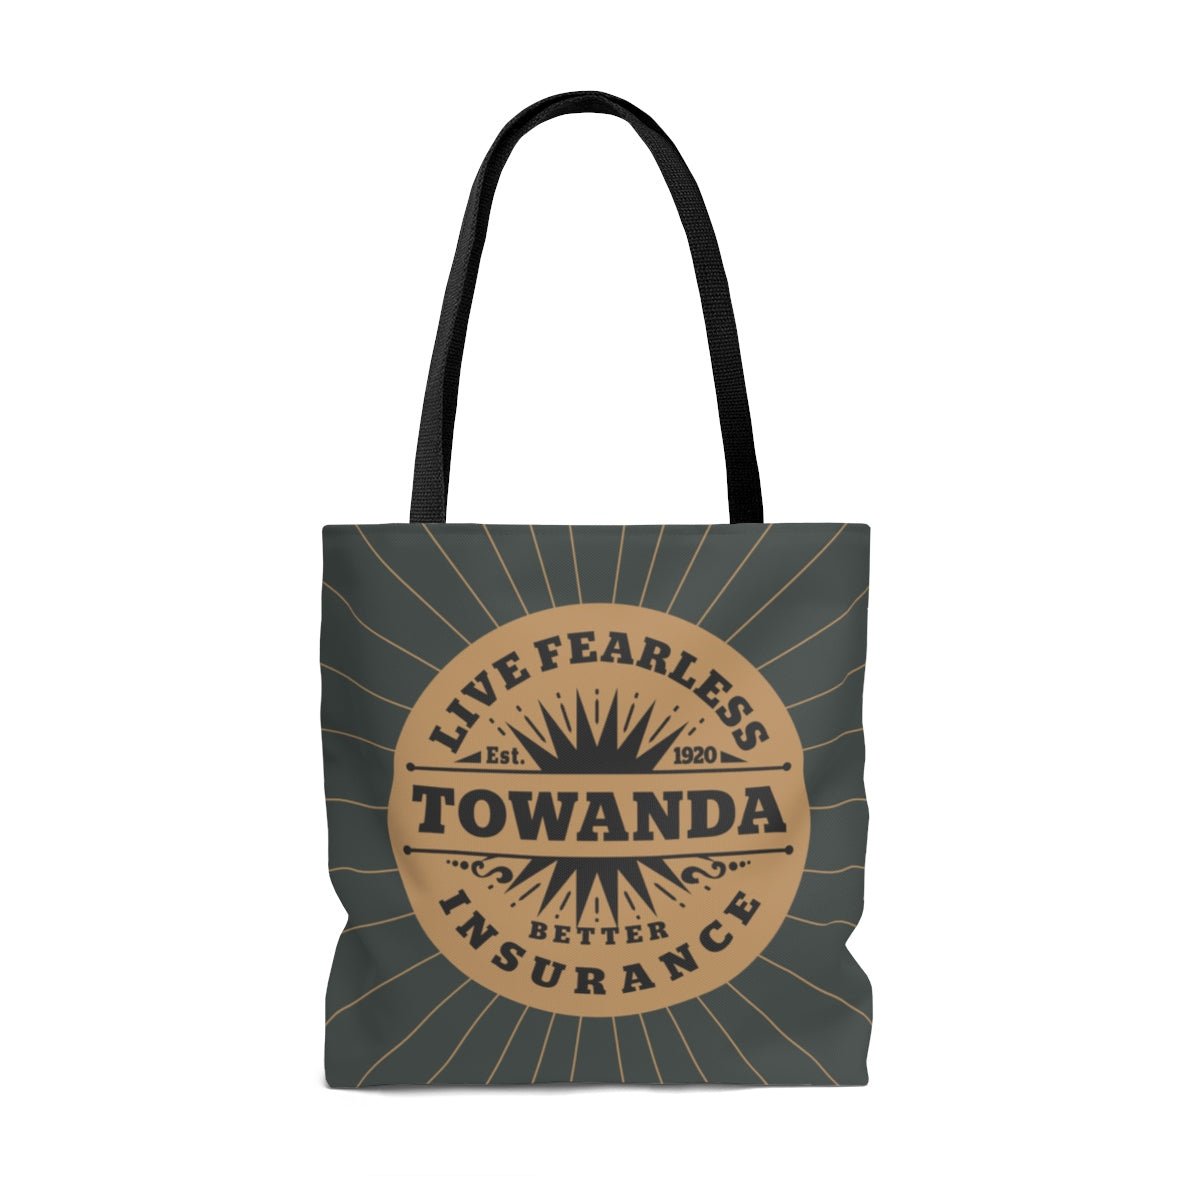 Live Fearless TOWANDA - Tote Bag